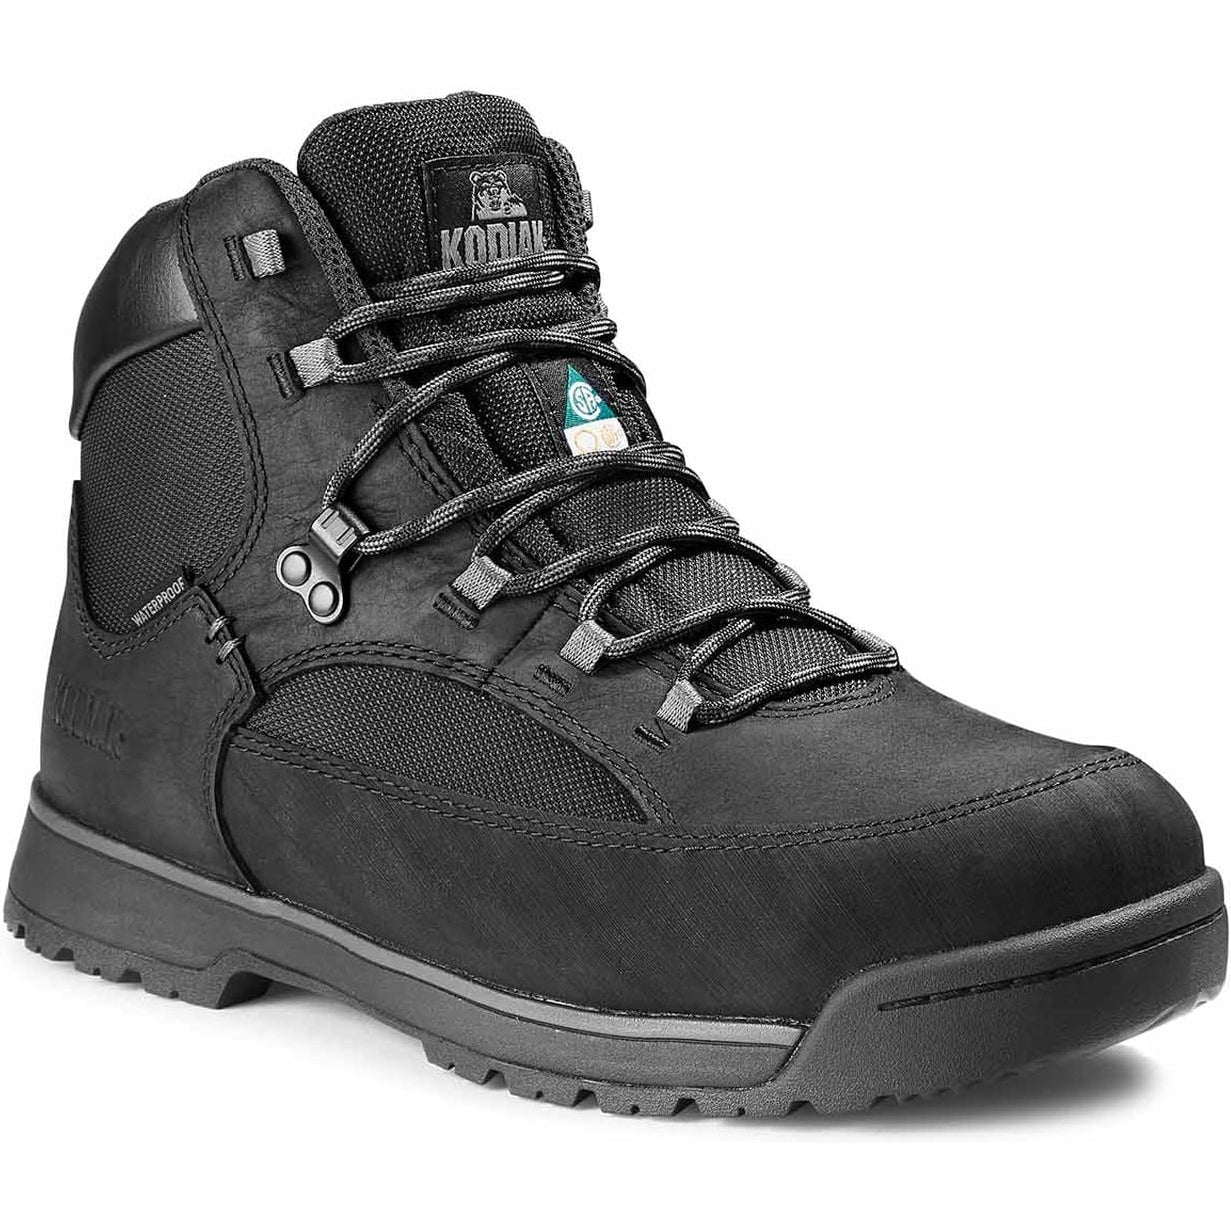 Kodiak Men's Greb Classic Steel Toe WP Hiker Safety Work Boot -Black- 834XBK 7 / Wide / Black - Overlook Boots